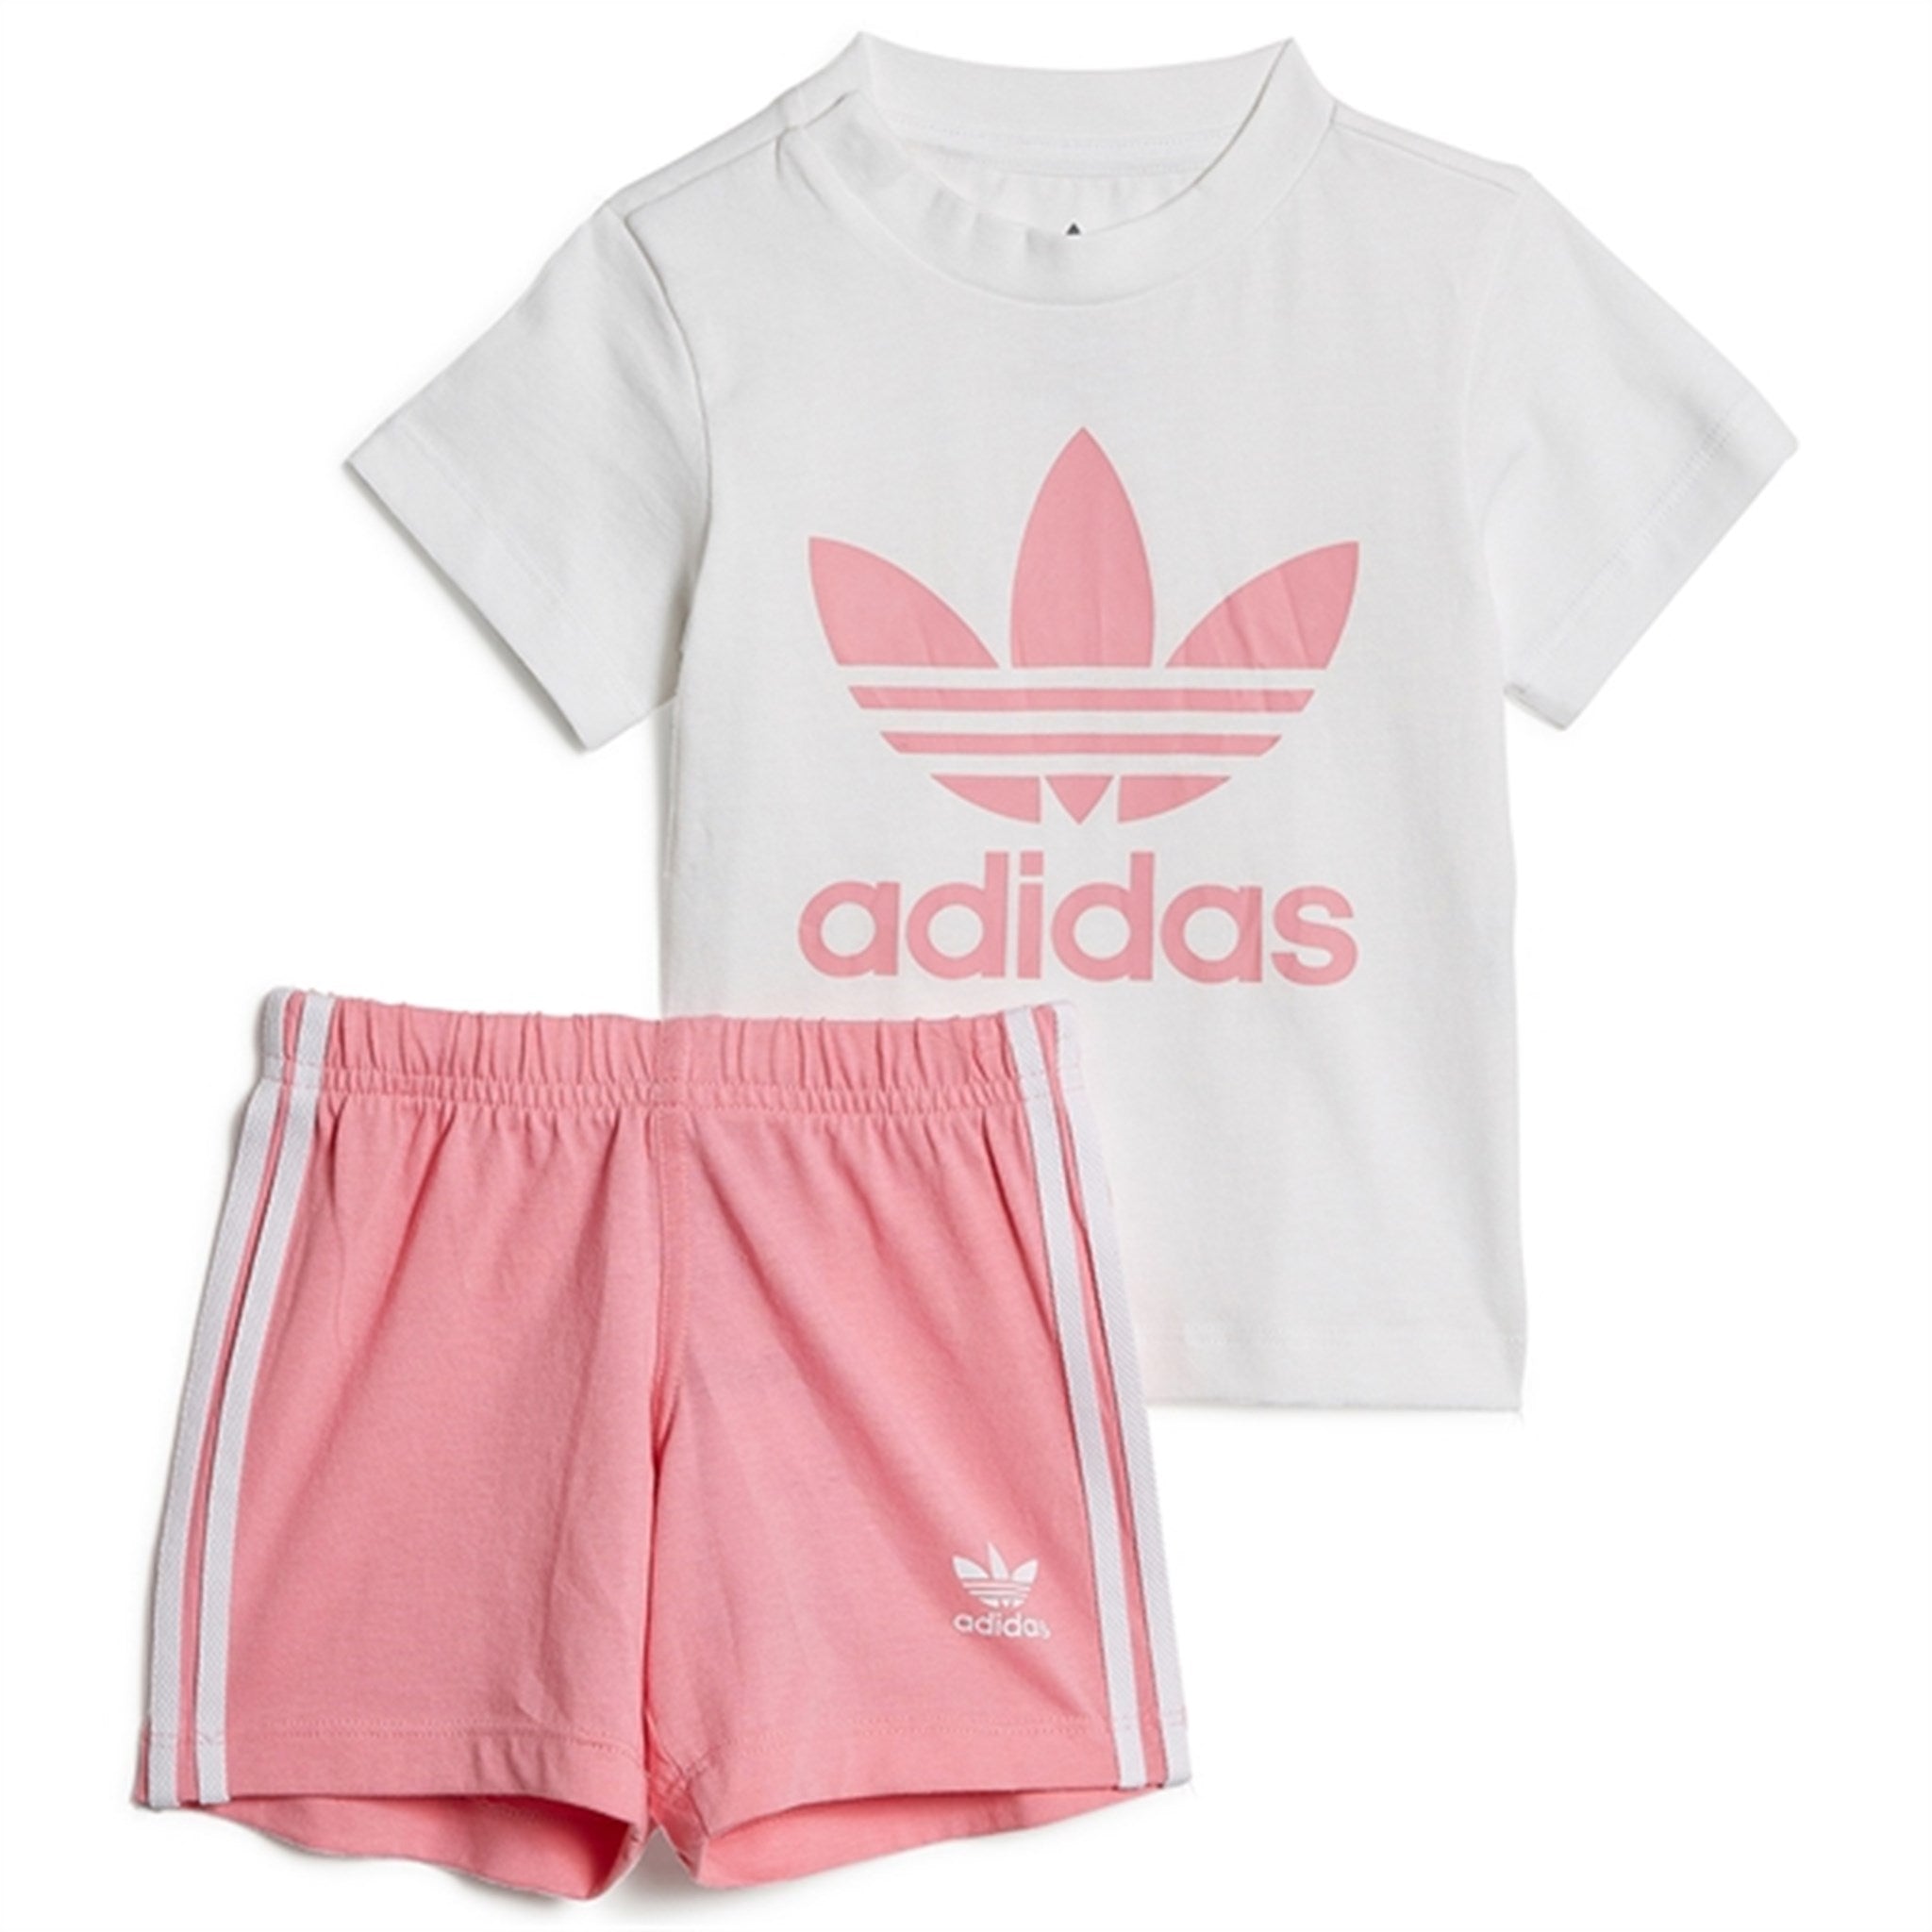 adidas Originals White / Pink Shorts Tee Sæt